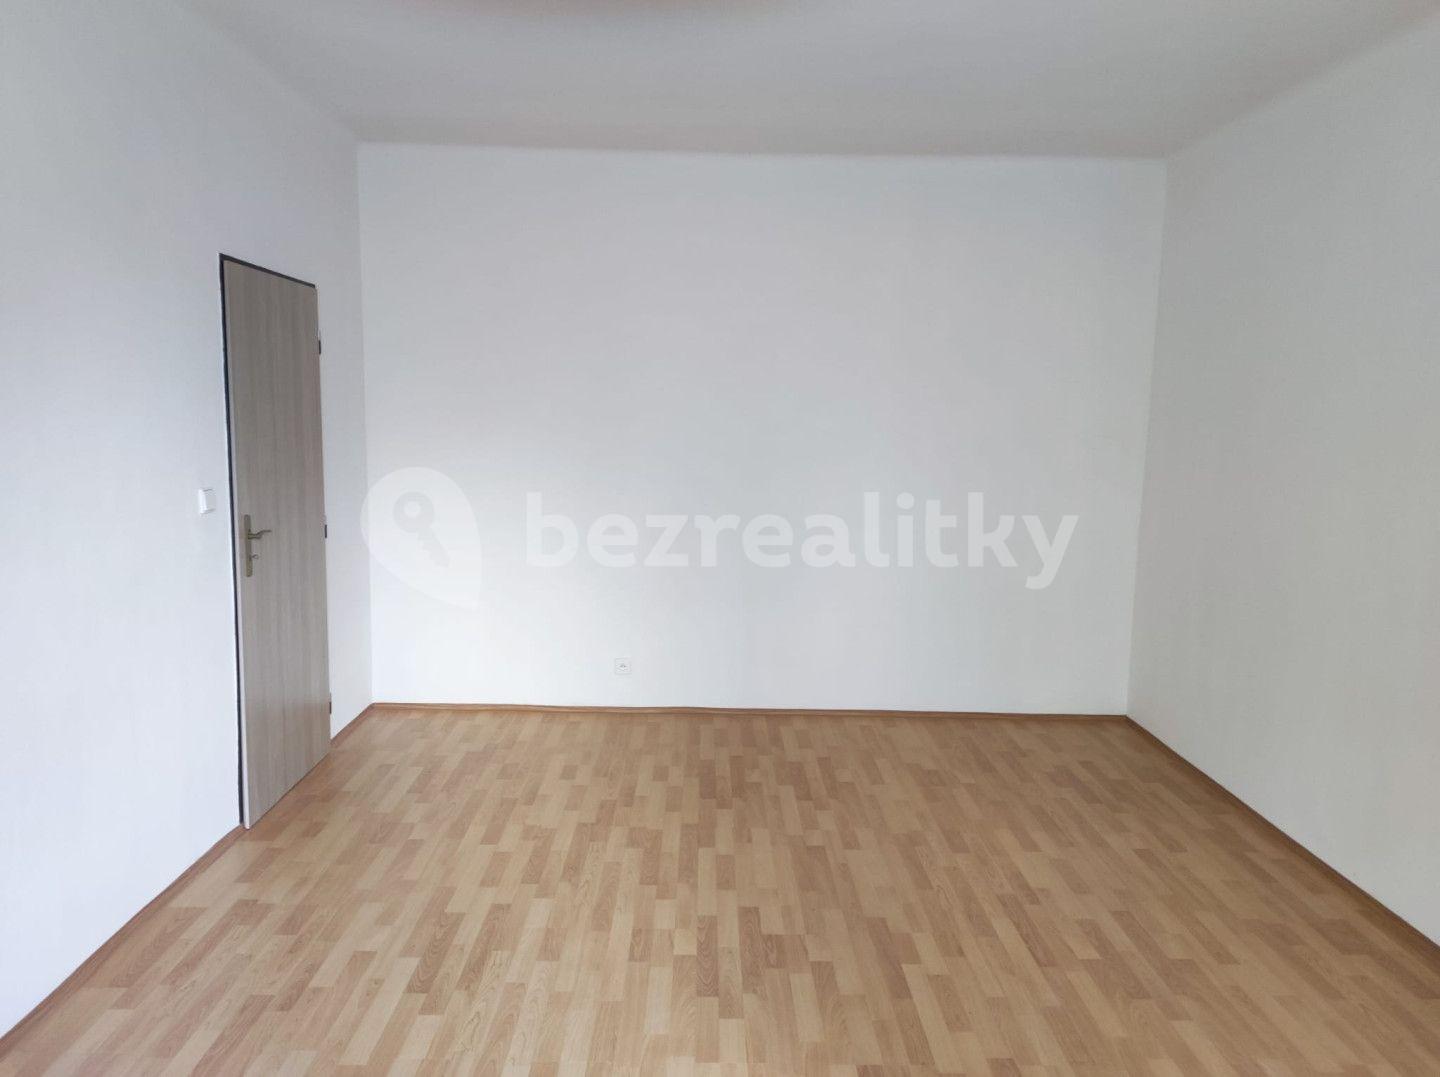 Prodej bytu 1+1 39 m², Jedličkova, Ostrava, Moravskoslezský kraj